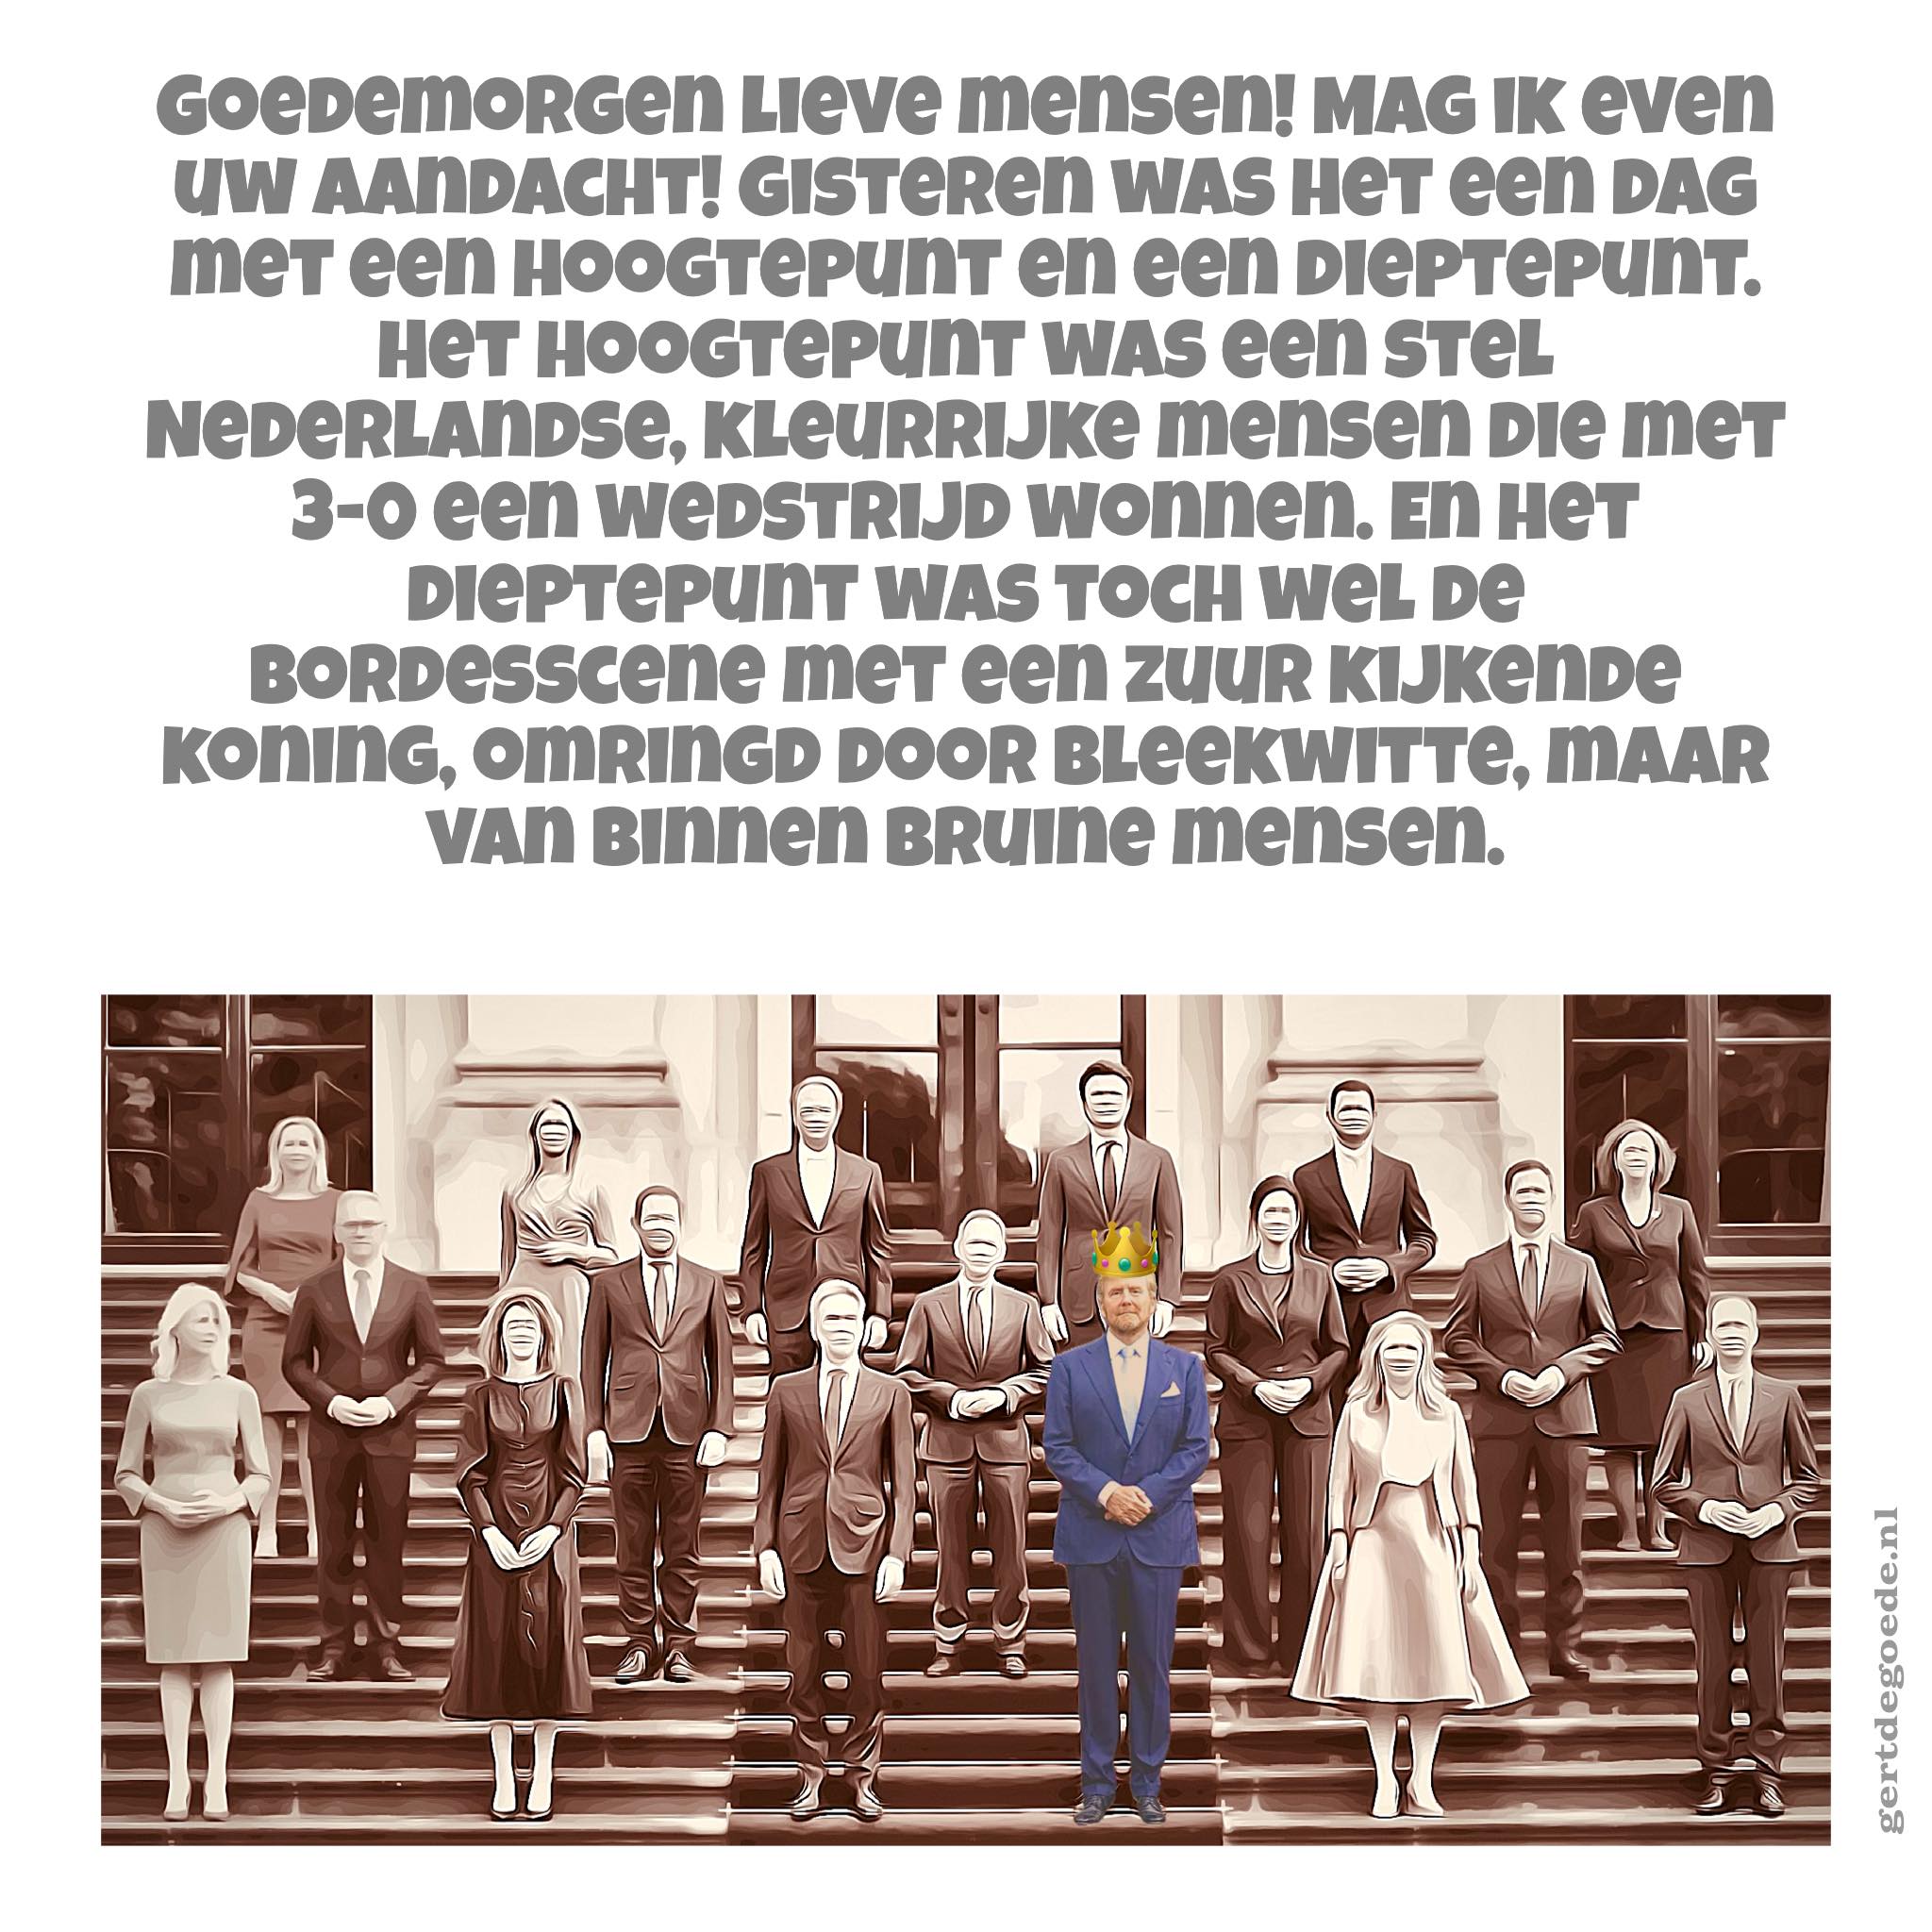 Paleis Huis ten Bosch bordes bruin rechts ultra extreem ongekozen premier Schoof minister president pvv nsc vvd bbb